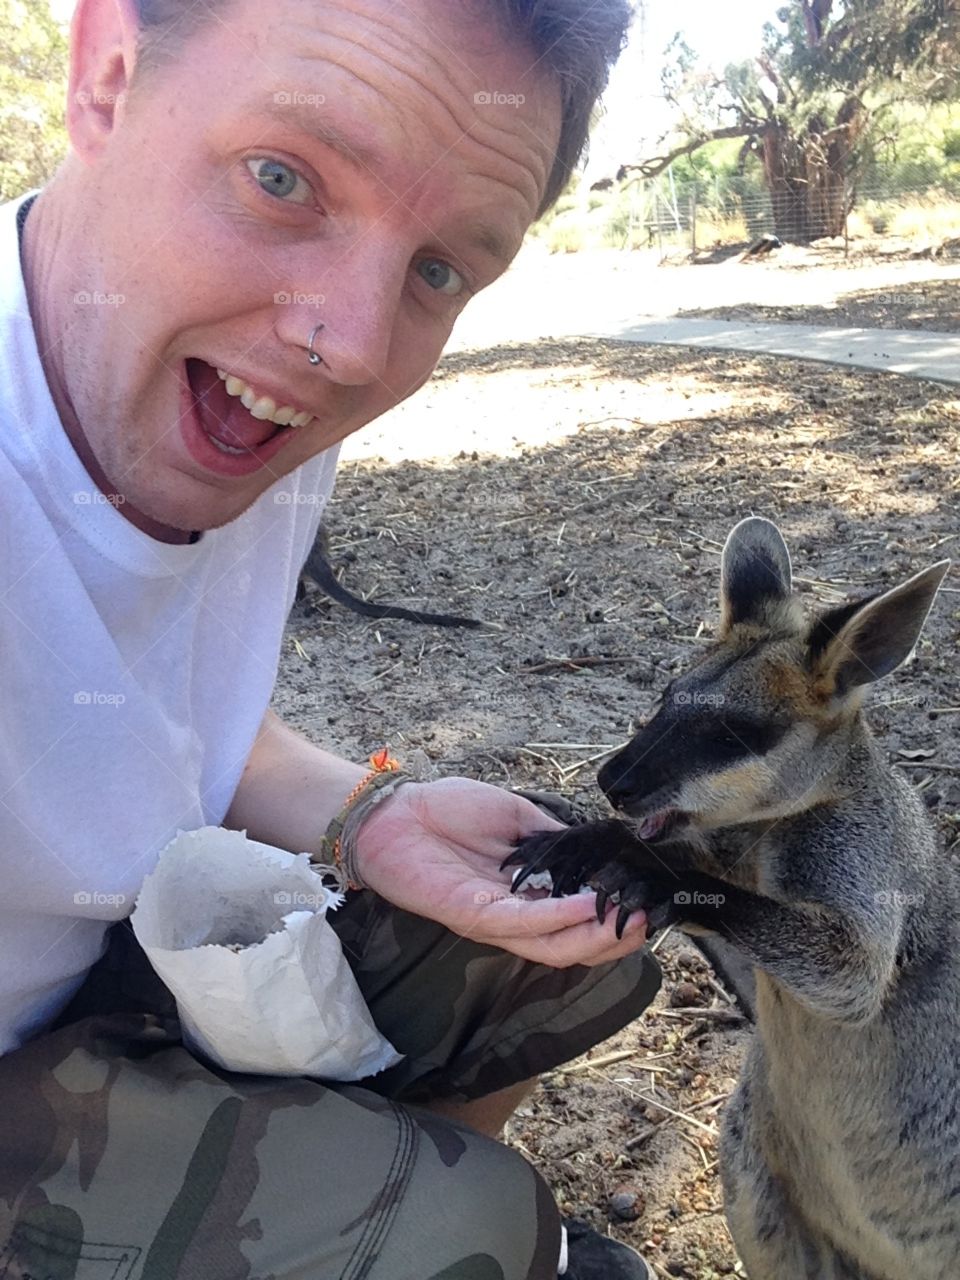 Roo. Feeding popcorn to kangaroo. 